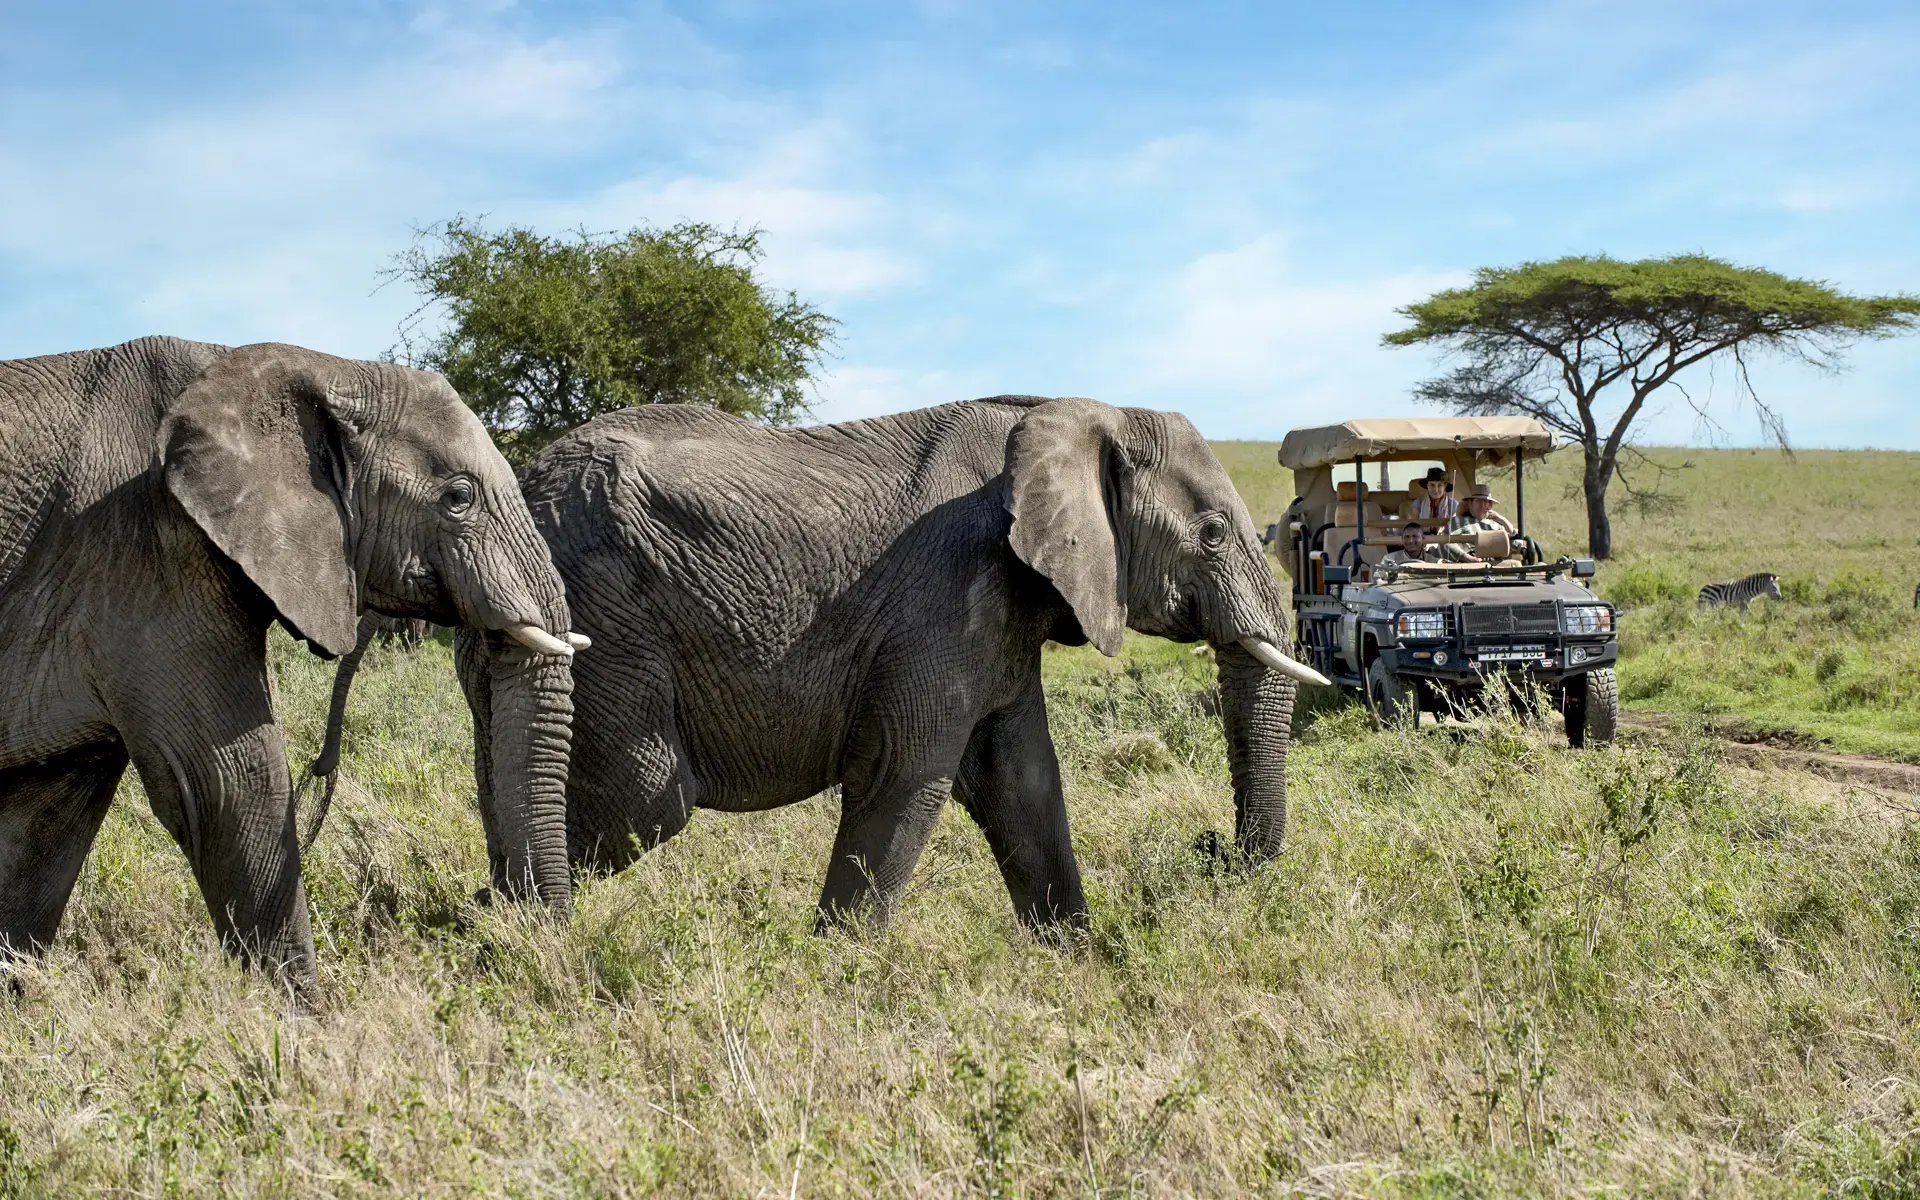 Elephant passing the safari vehicle